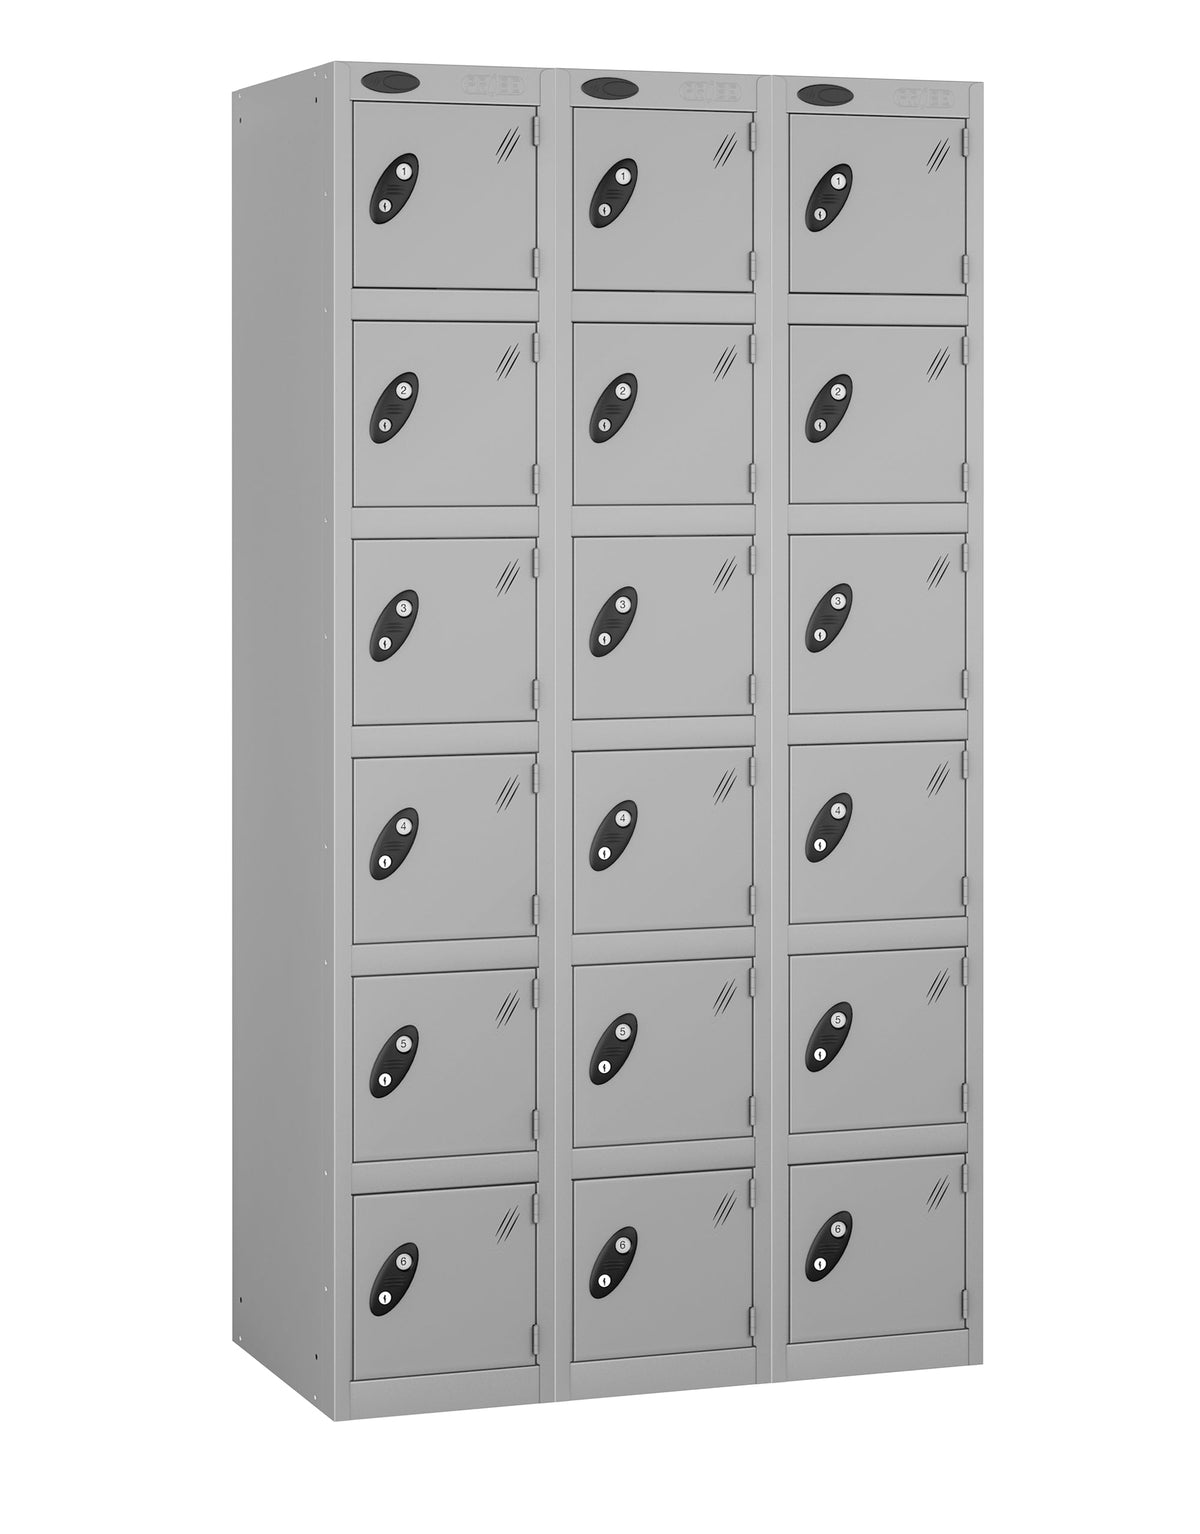 PROBEBOX STANDARD 3 NEST STEEL LOCKERS - DUST SILVER 6 DOOR Storage Lockers > Lockers > Cabinets > Storage > Probe > One Stop For Safety   